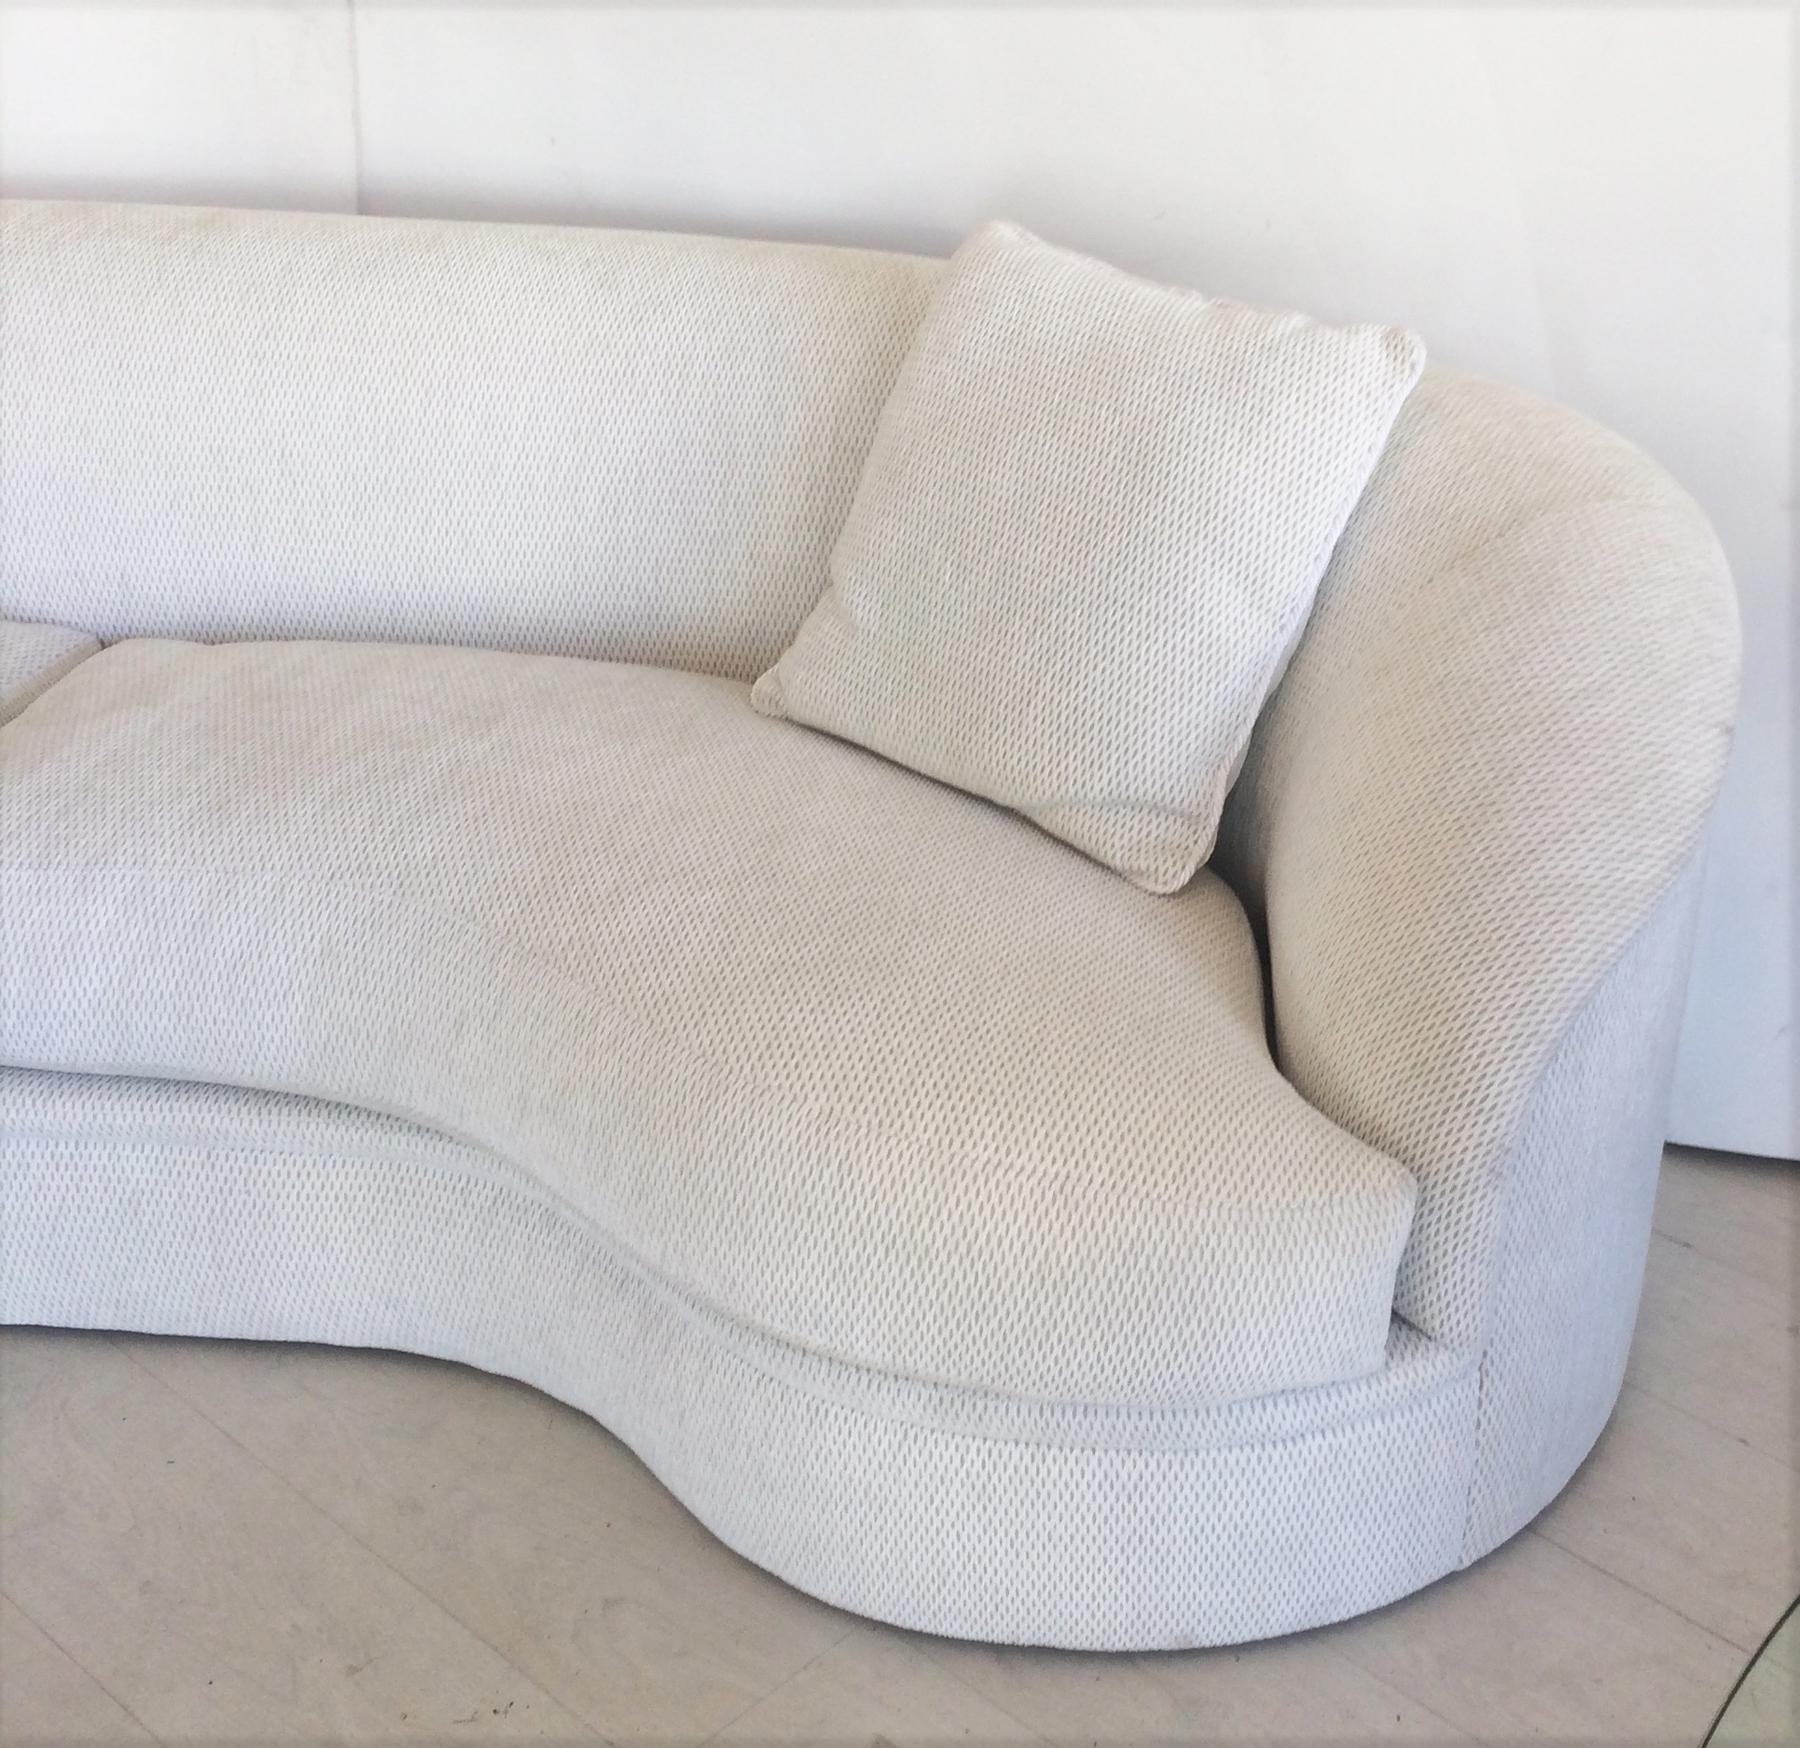 American Valdimir Kagan Biomorphic Curved Sofa for Directional